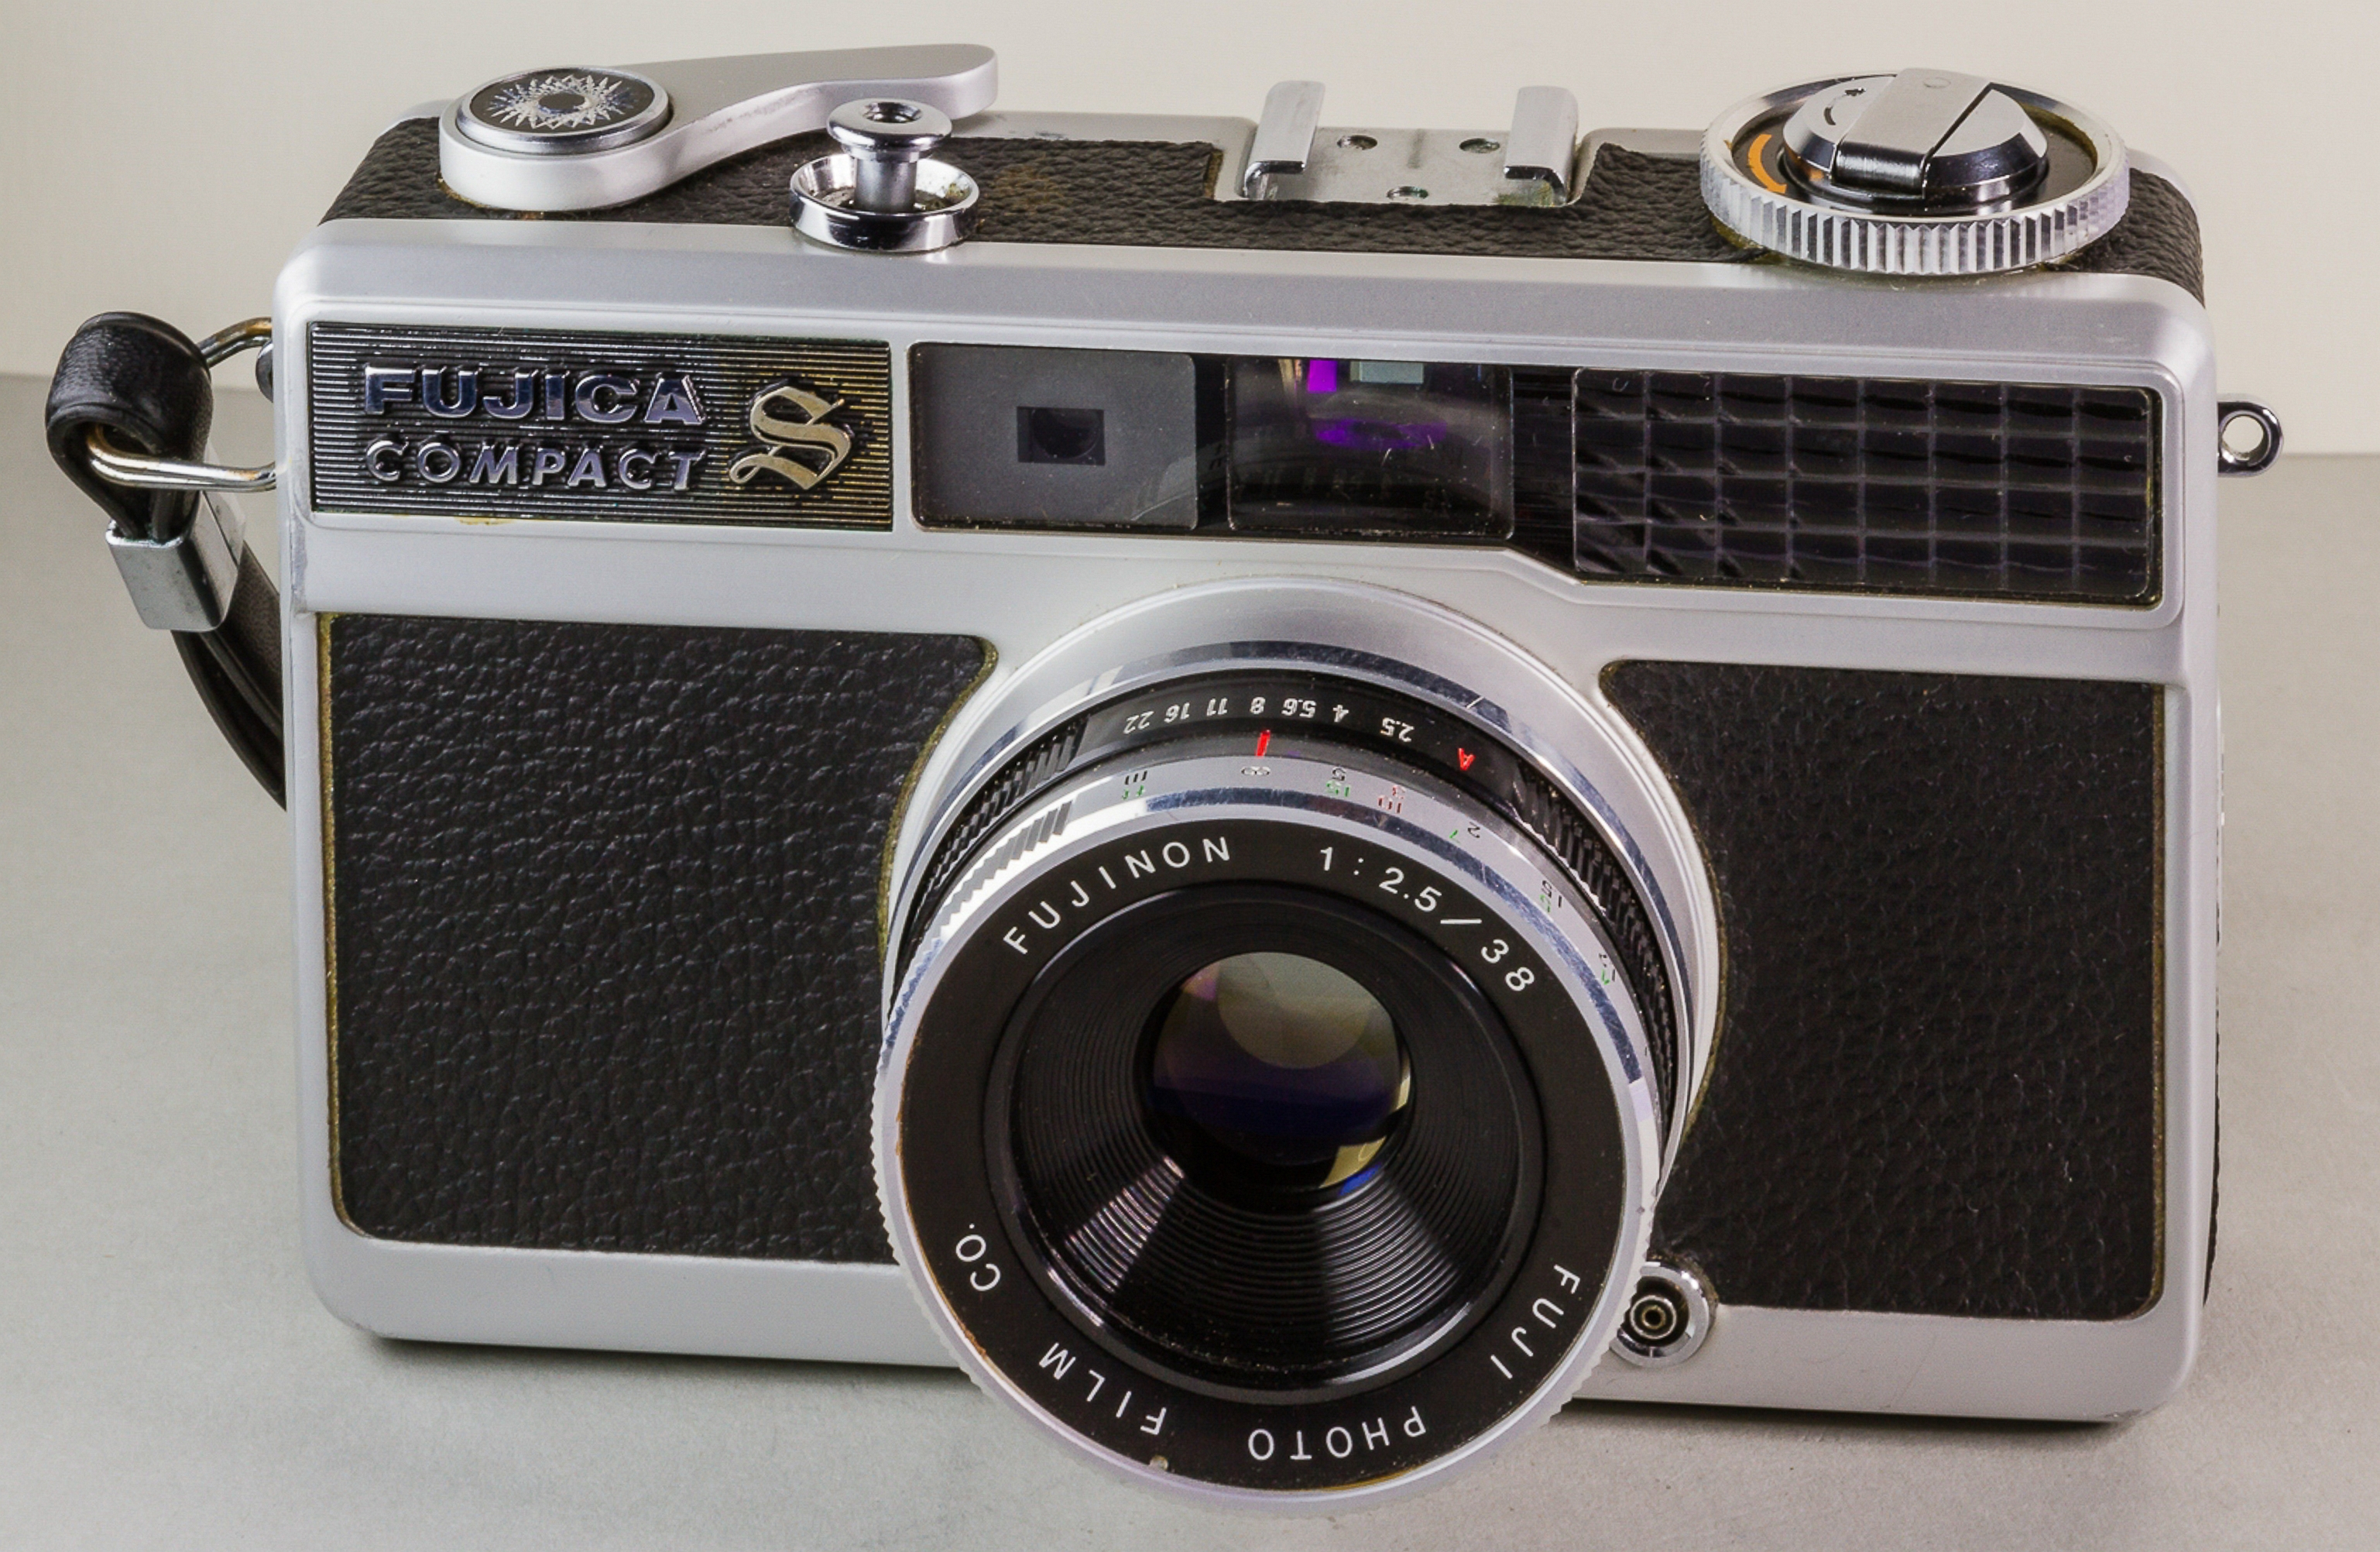 2015 04 08 014 35mm camera Fuji Fujica Compact S